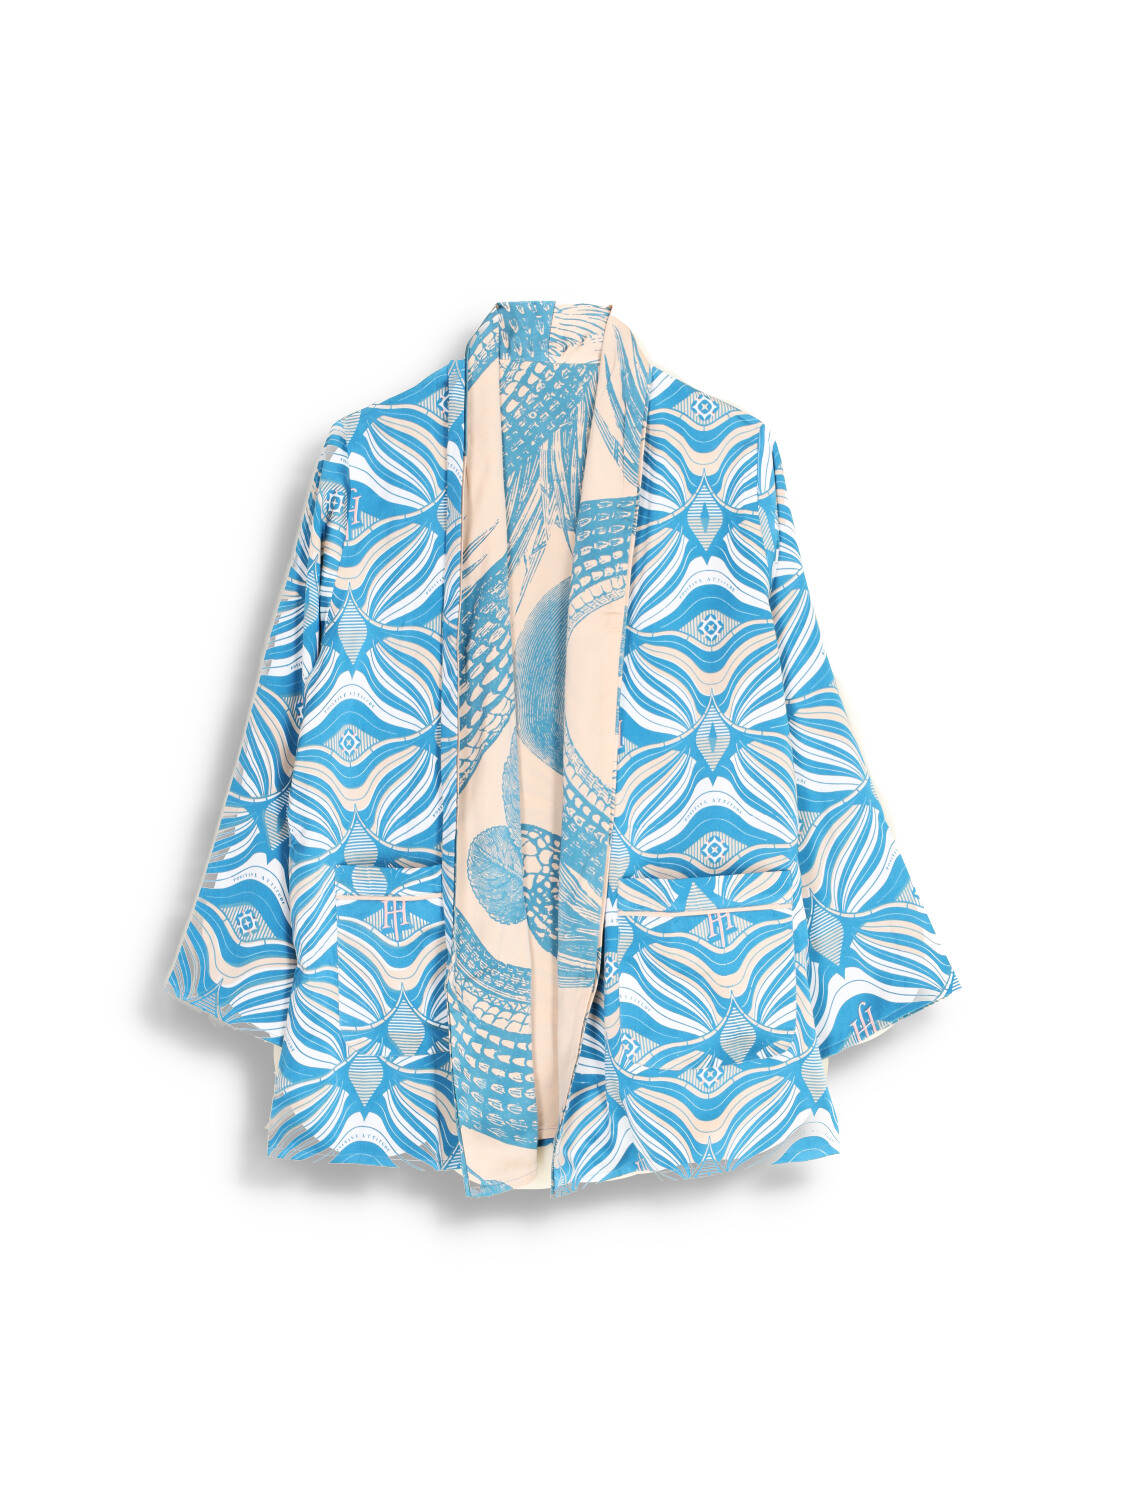 Kimono Mature Calice - Silk kimono with print design